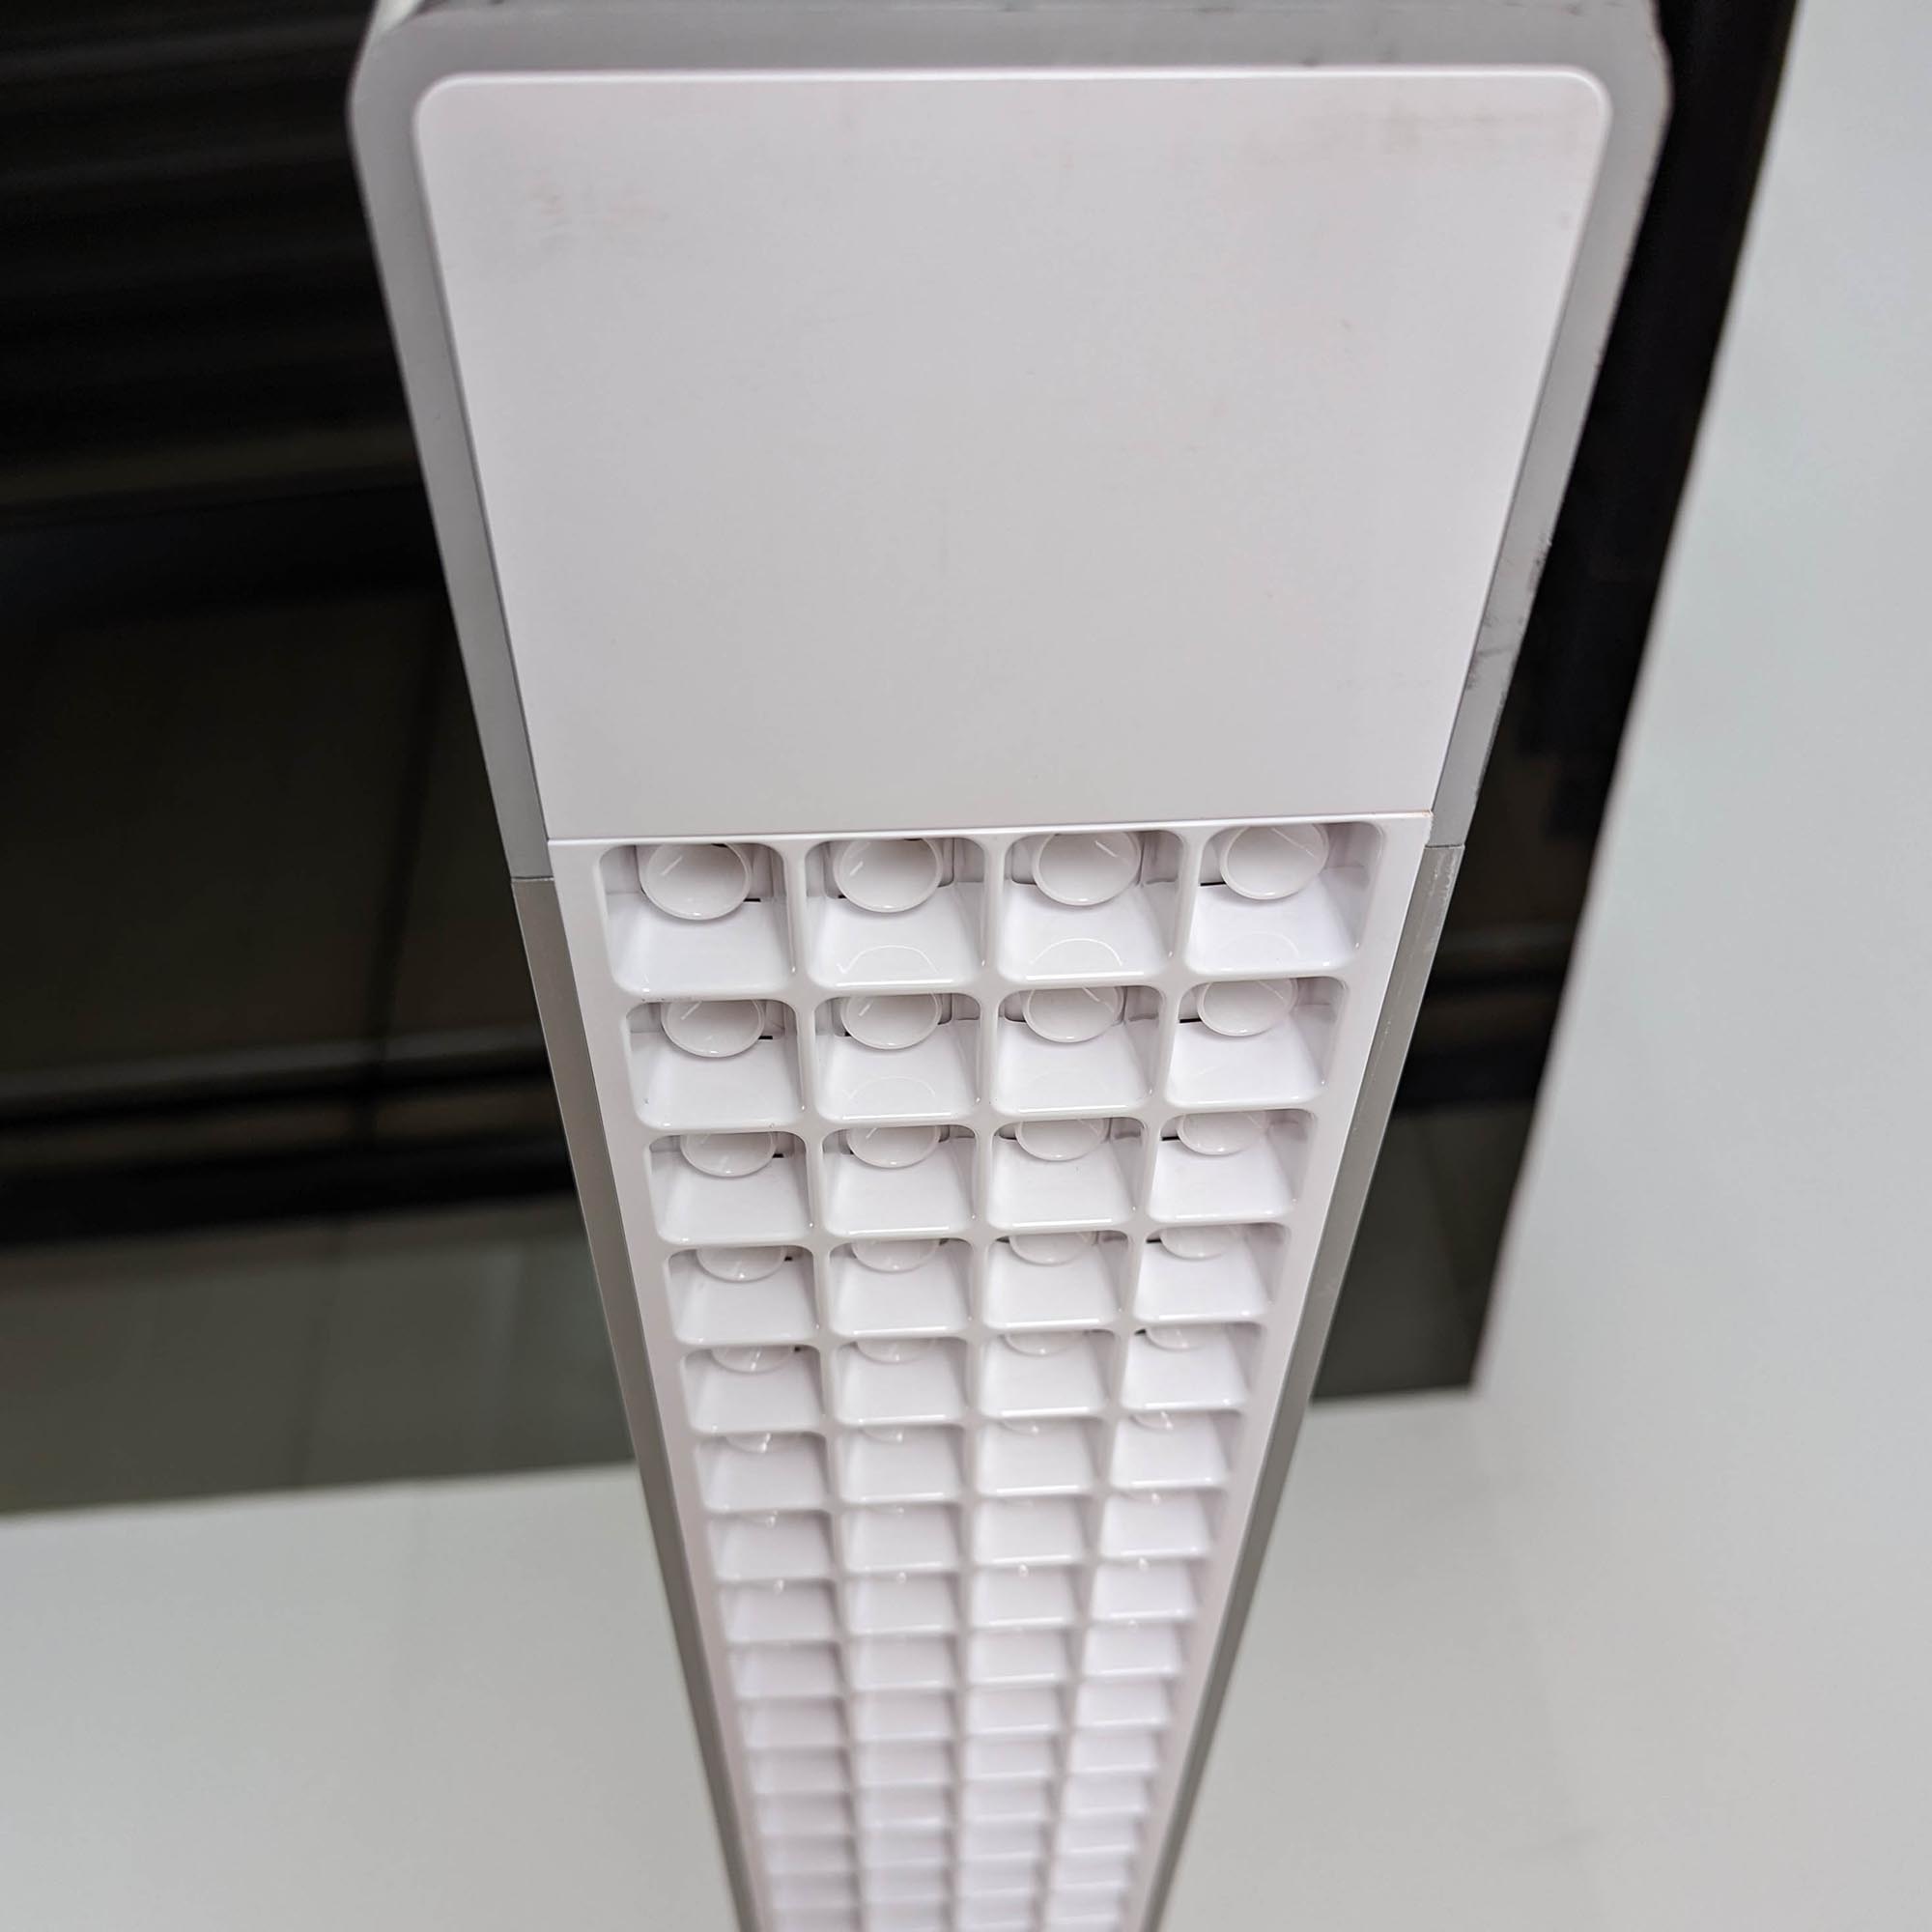 XT-A LONG von Tobias Grau - Büro-Stehlampe LED mit 180 cm Ausleger - Ausleuchtung wählbar Decke-Boden 